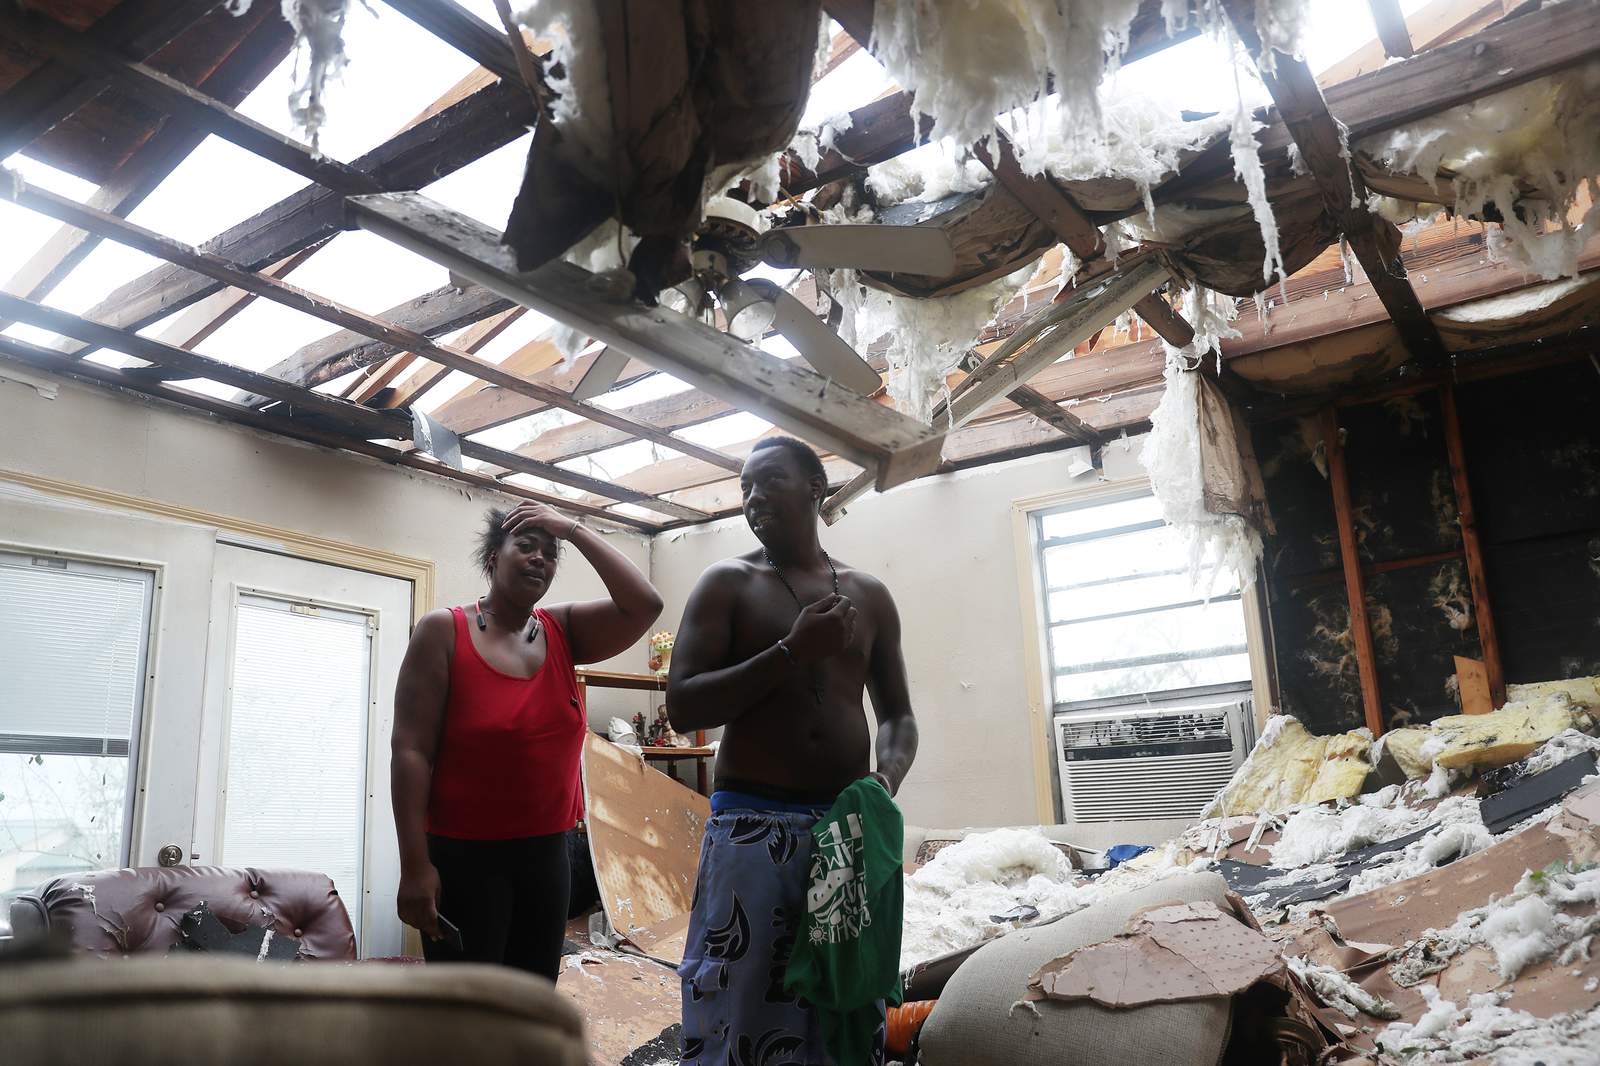 Daylight reveals images of destruction across Louisiana